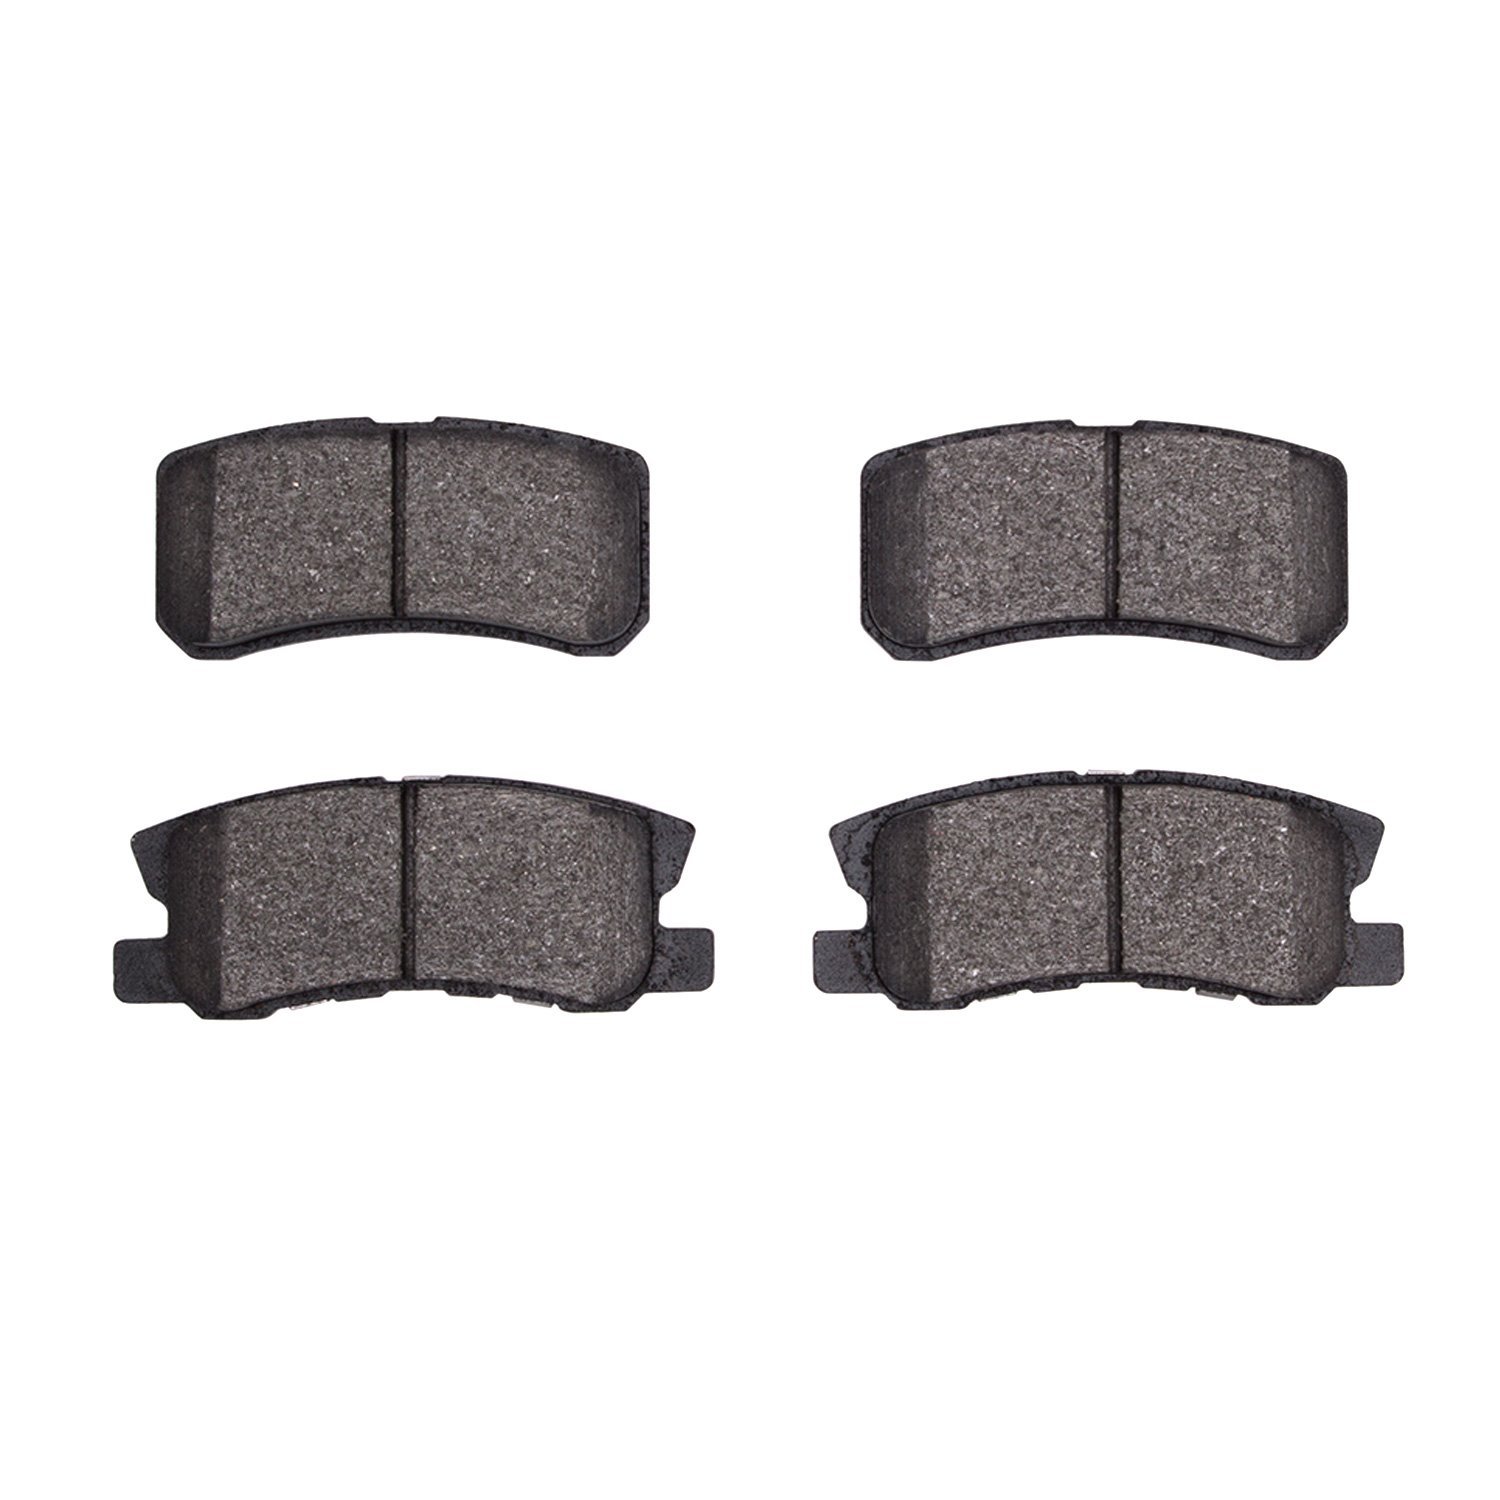 Ceramic Brake Pads, 2000-2017 Fits Multiple Makes/Models, Position: Rear